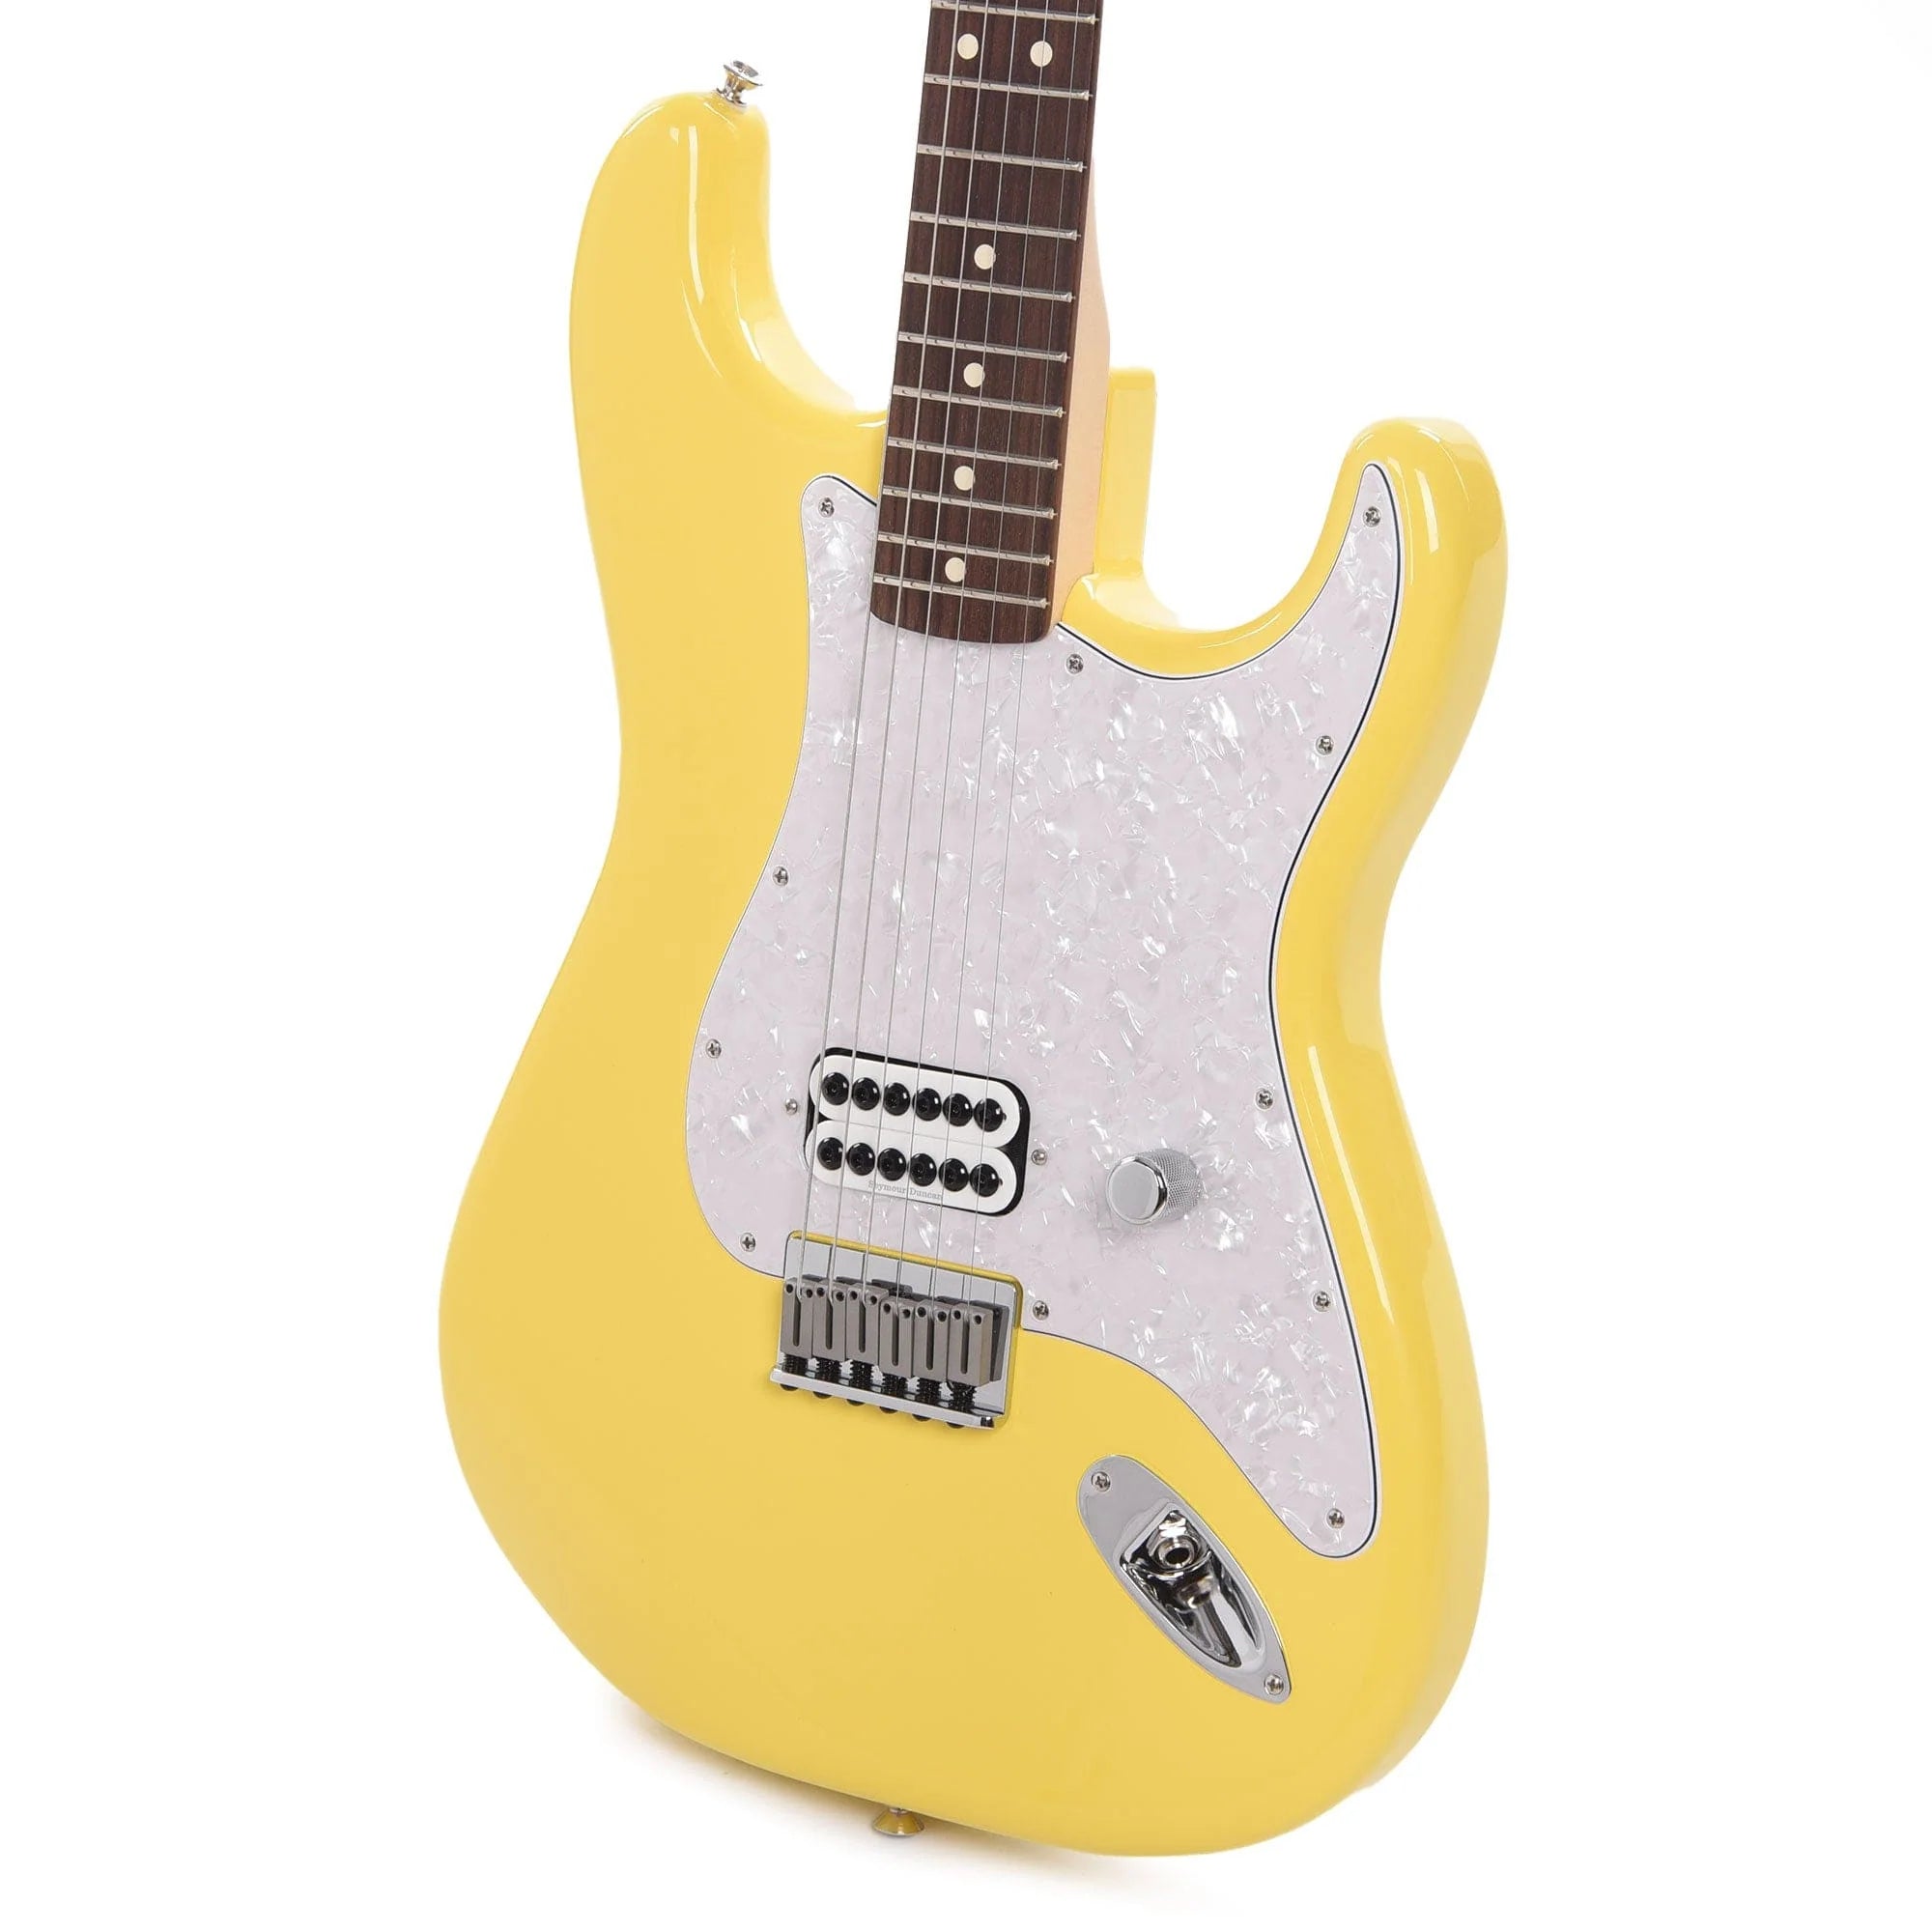 Fender Artist Limited Edition Tom DeLonge Stratocaster Graffiti Yellow